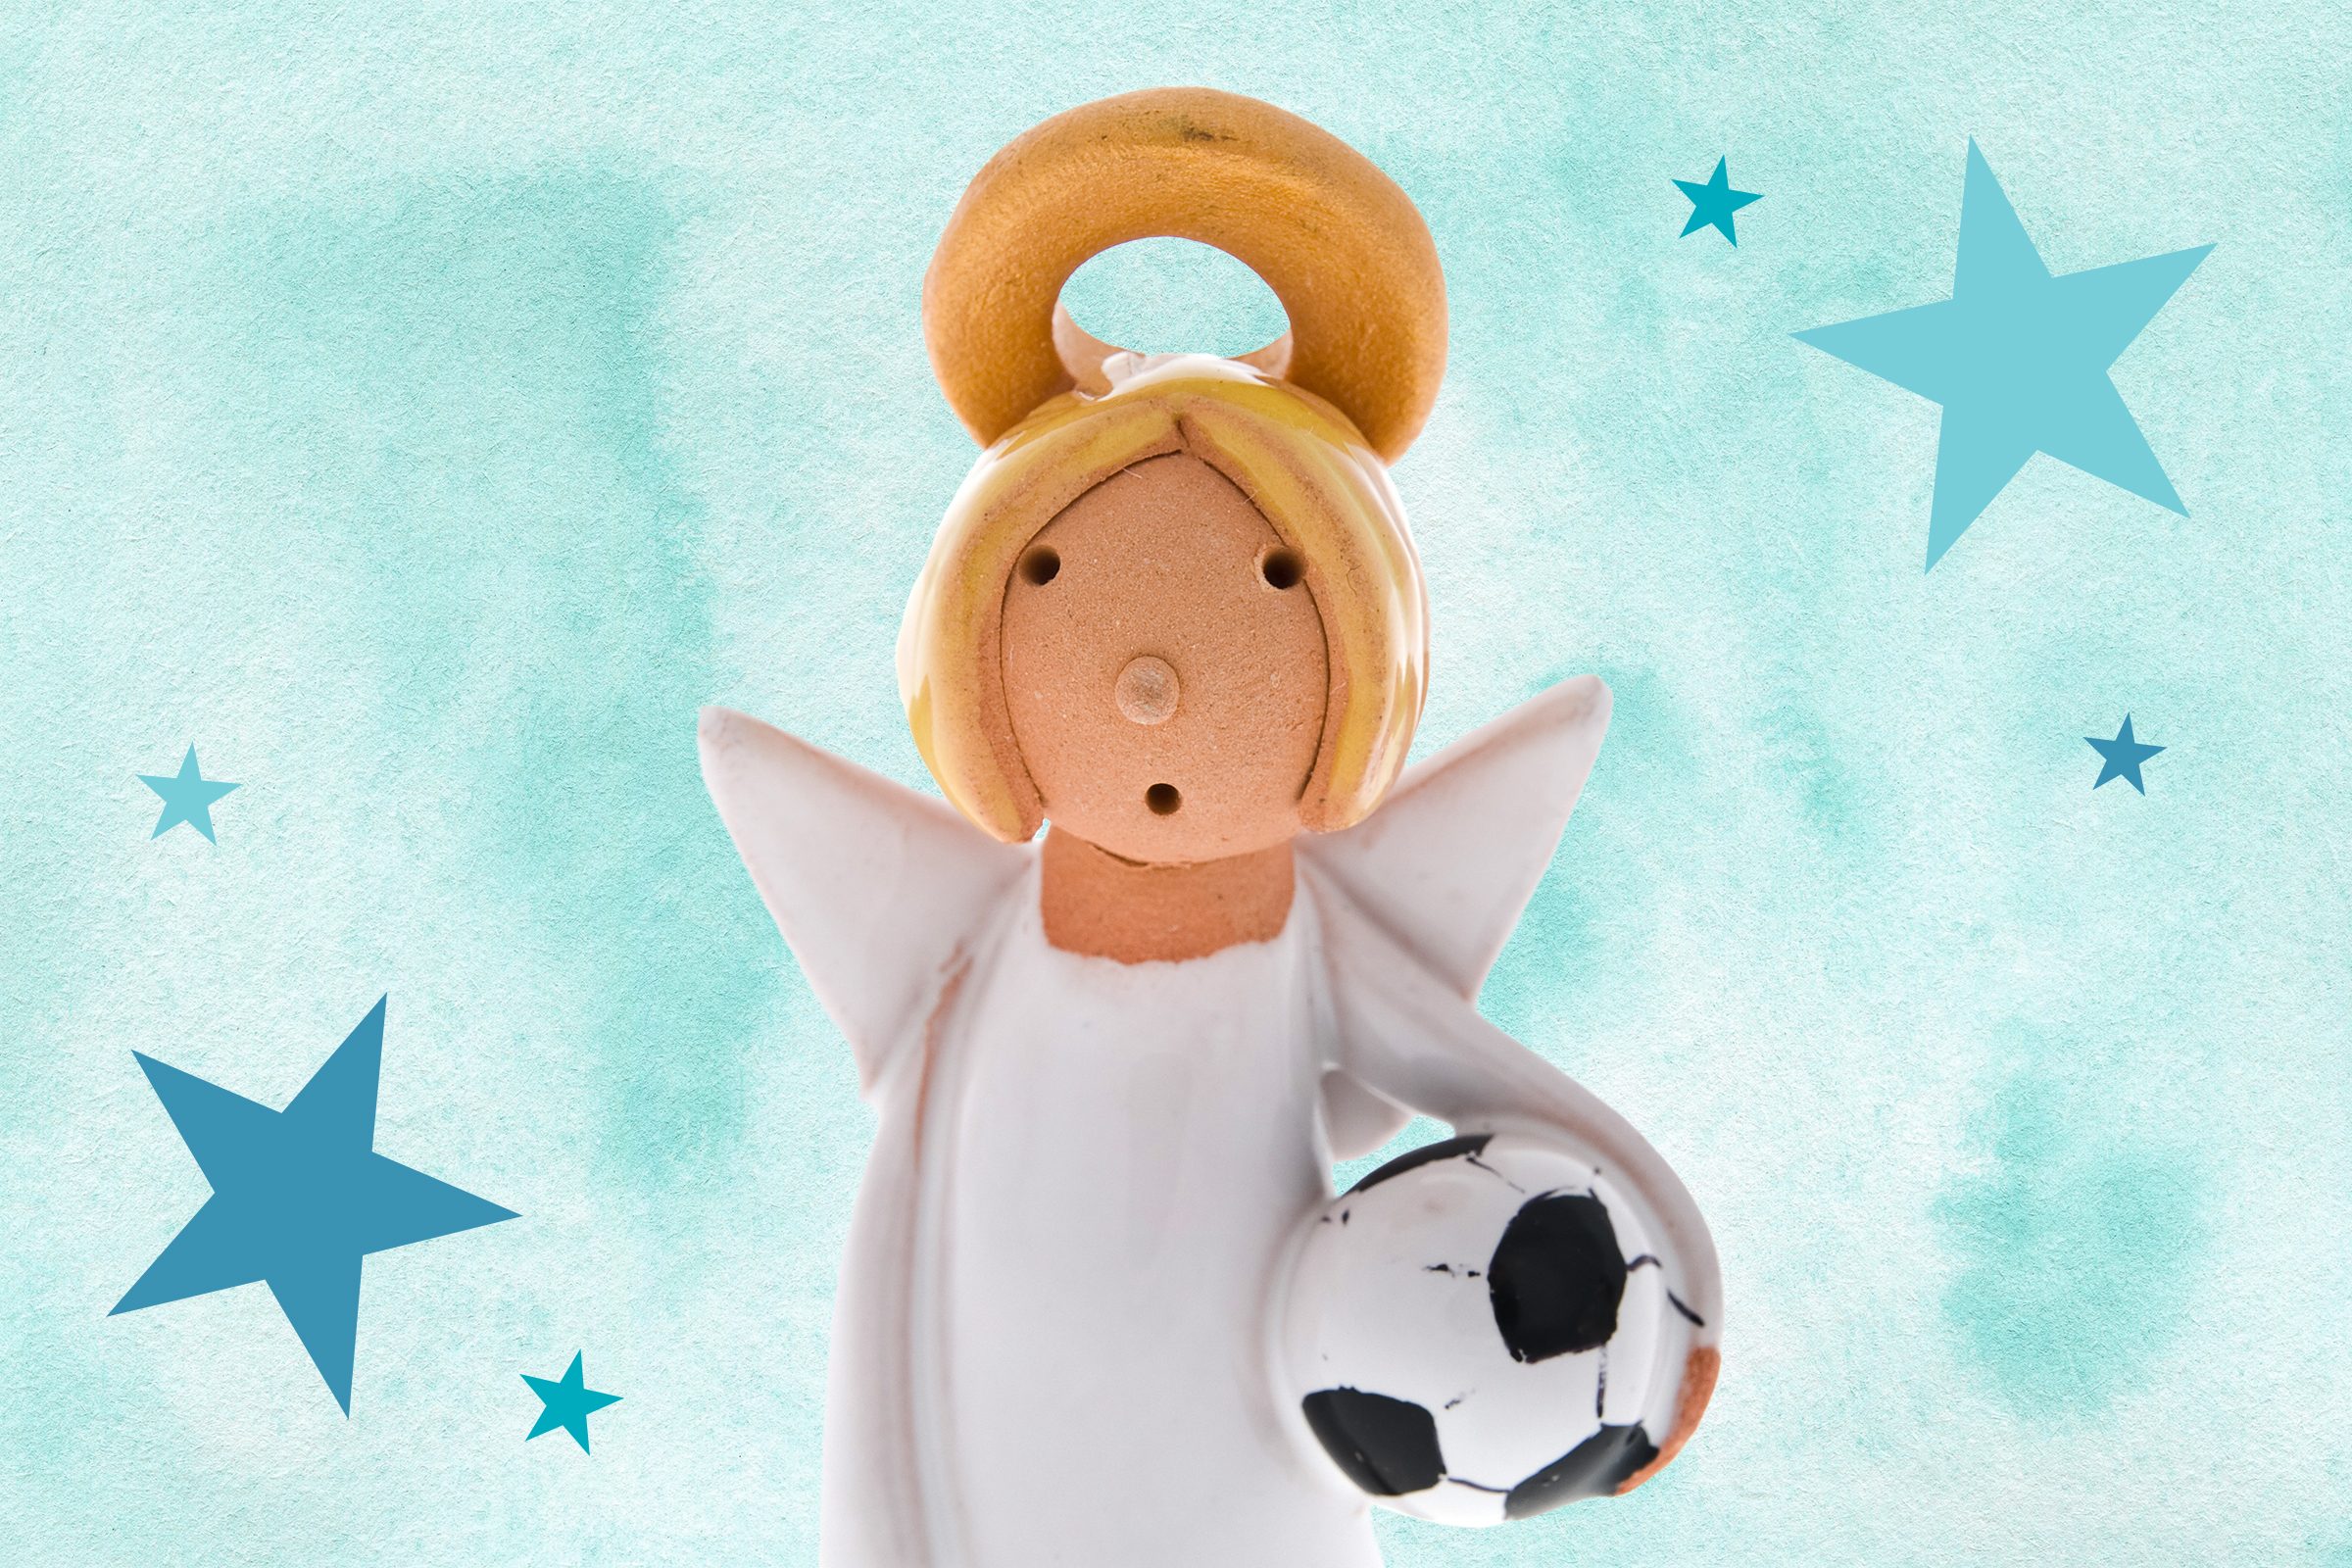 Figurine of an angel holding a soccer ball